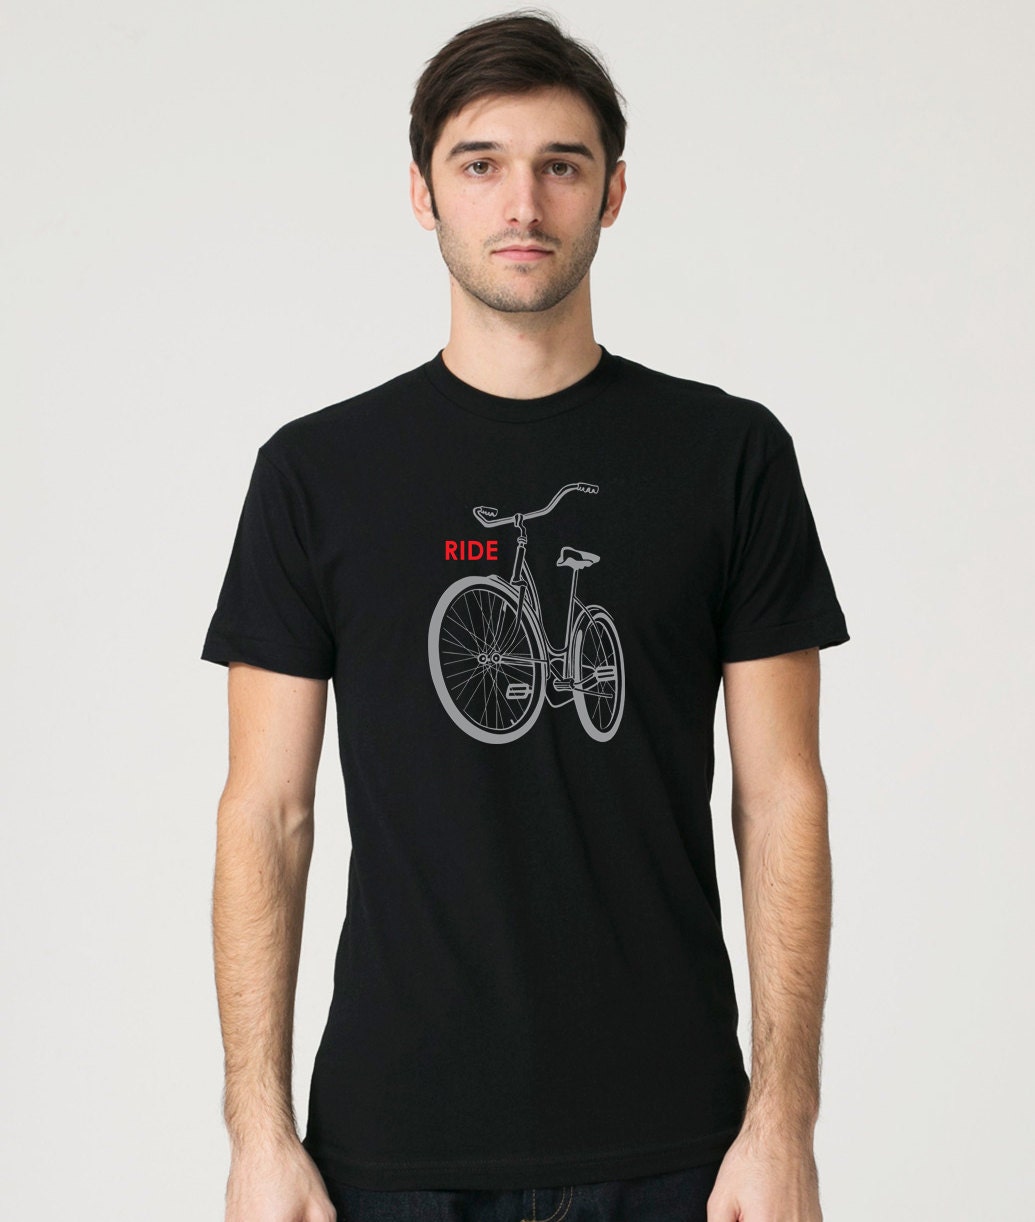 Bike shirt Light Reflective shirt Ride a Bike t-Shirt